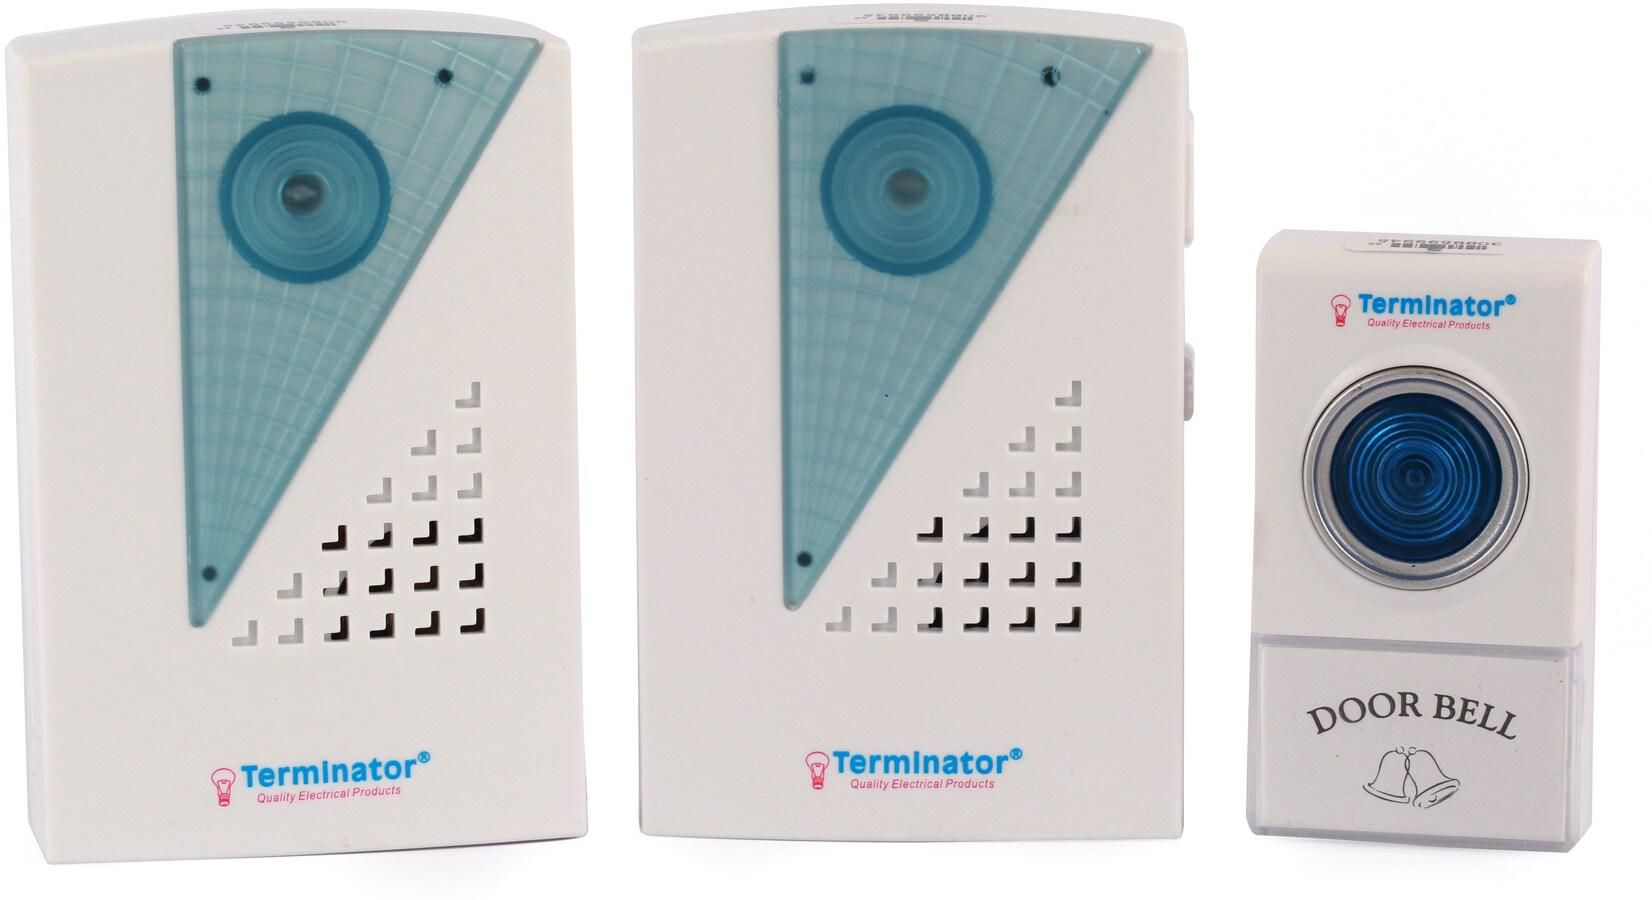 Terminator Brand Digital Wireless Door Bell with 38 Different Melodies